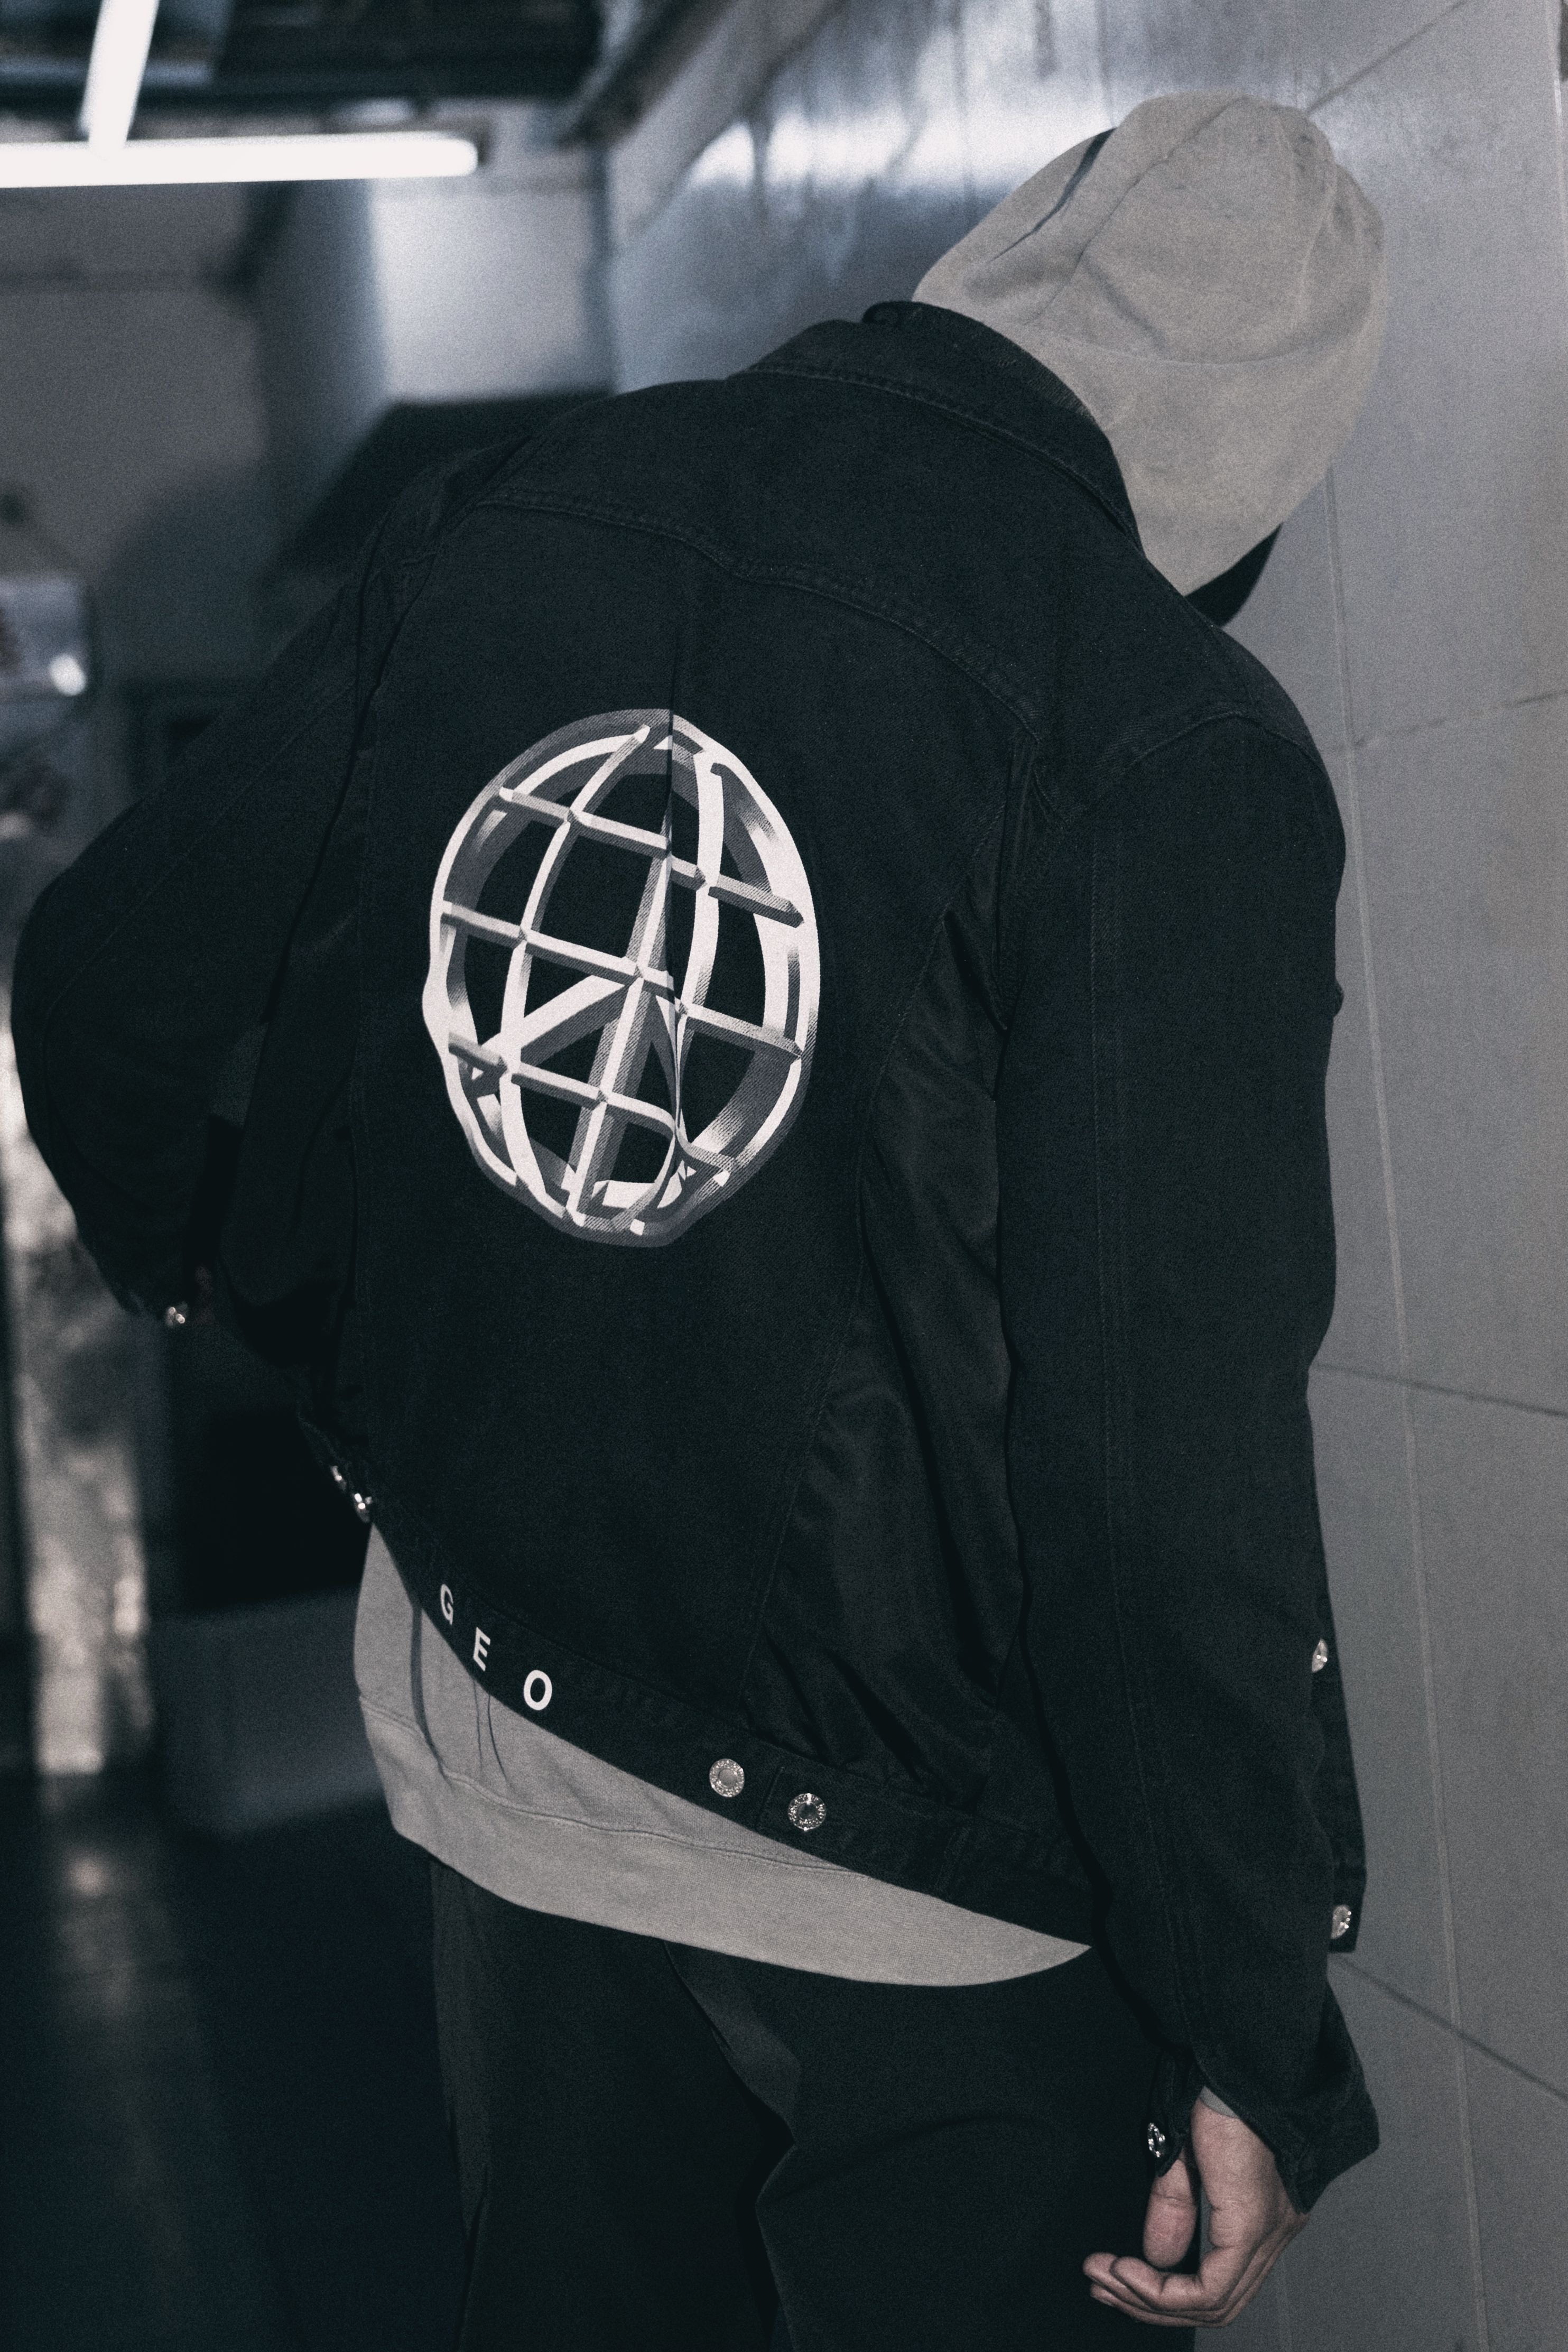 GEO Hyper-Graphical Studio HK Capsule Donda Kanye West Music Geo Owen fashion jackets hoodies graphics text earth space science Hong Kong G E O  2 Chainz Pusha T Big Krit